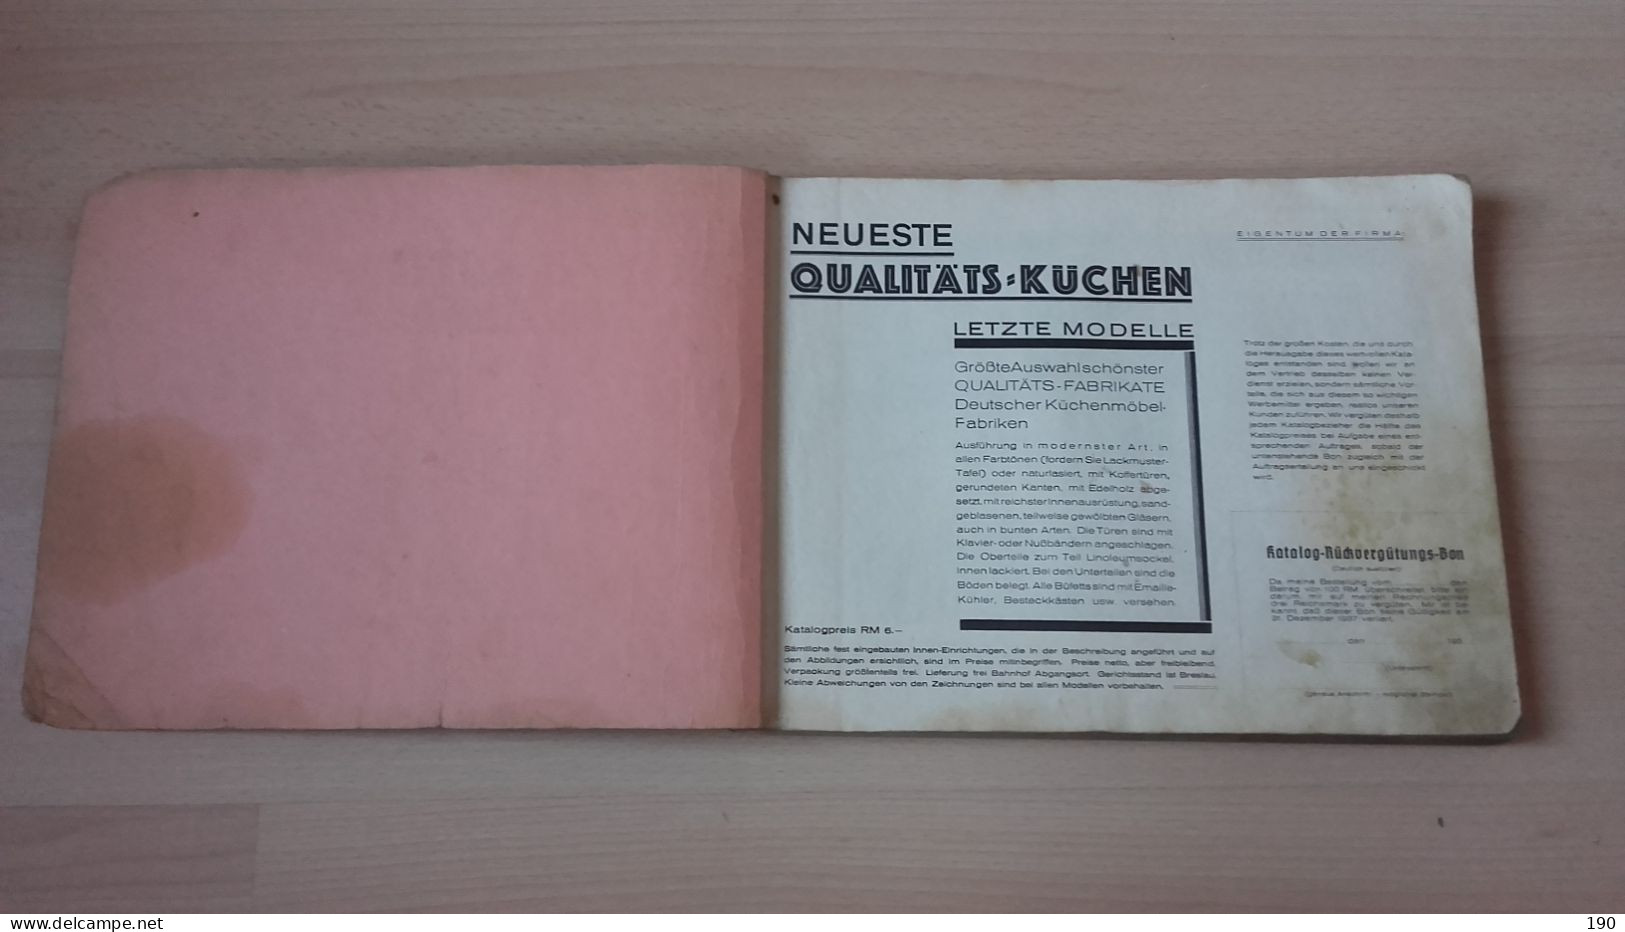 Carton Catalogue/catalog Of Furniture.Katalog Der Mobel.Besonders Schone Modelle Qualitats Kuchen - Alte Bücher